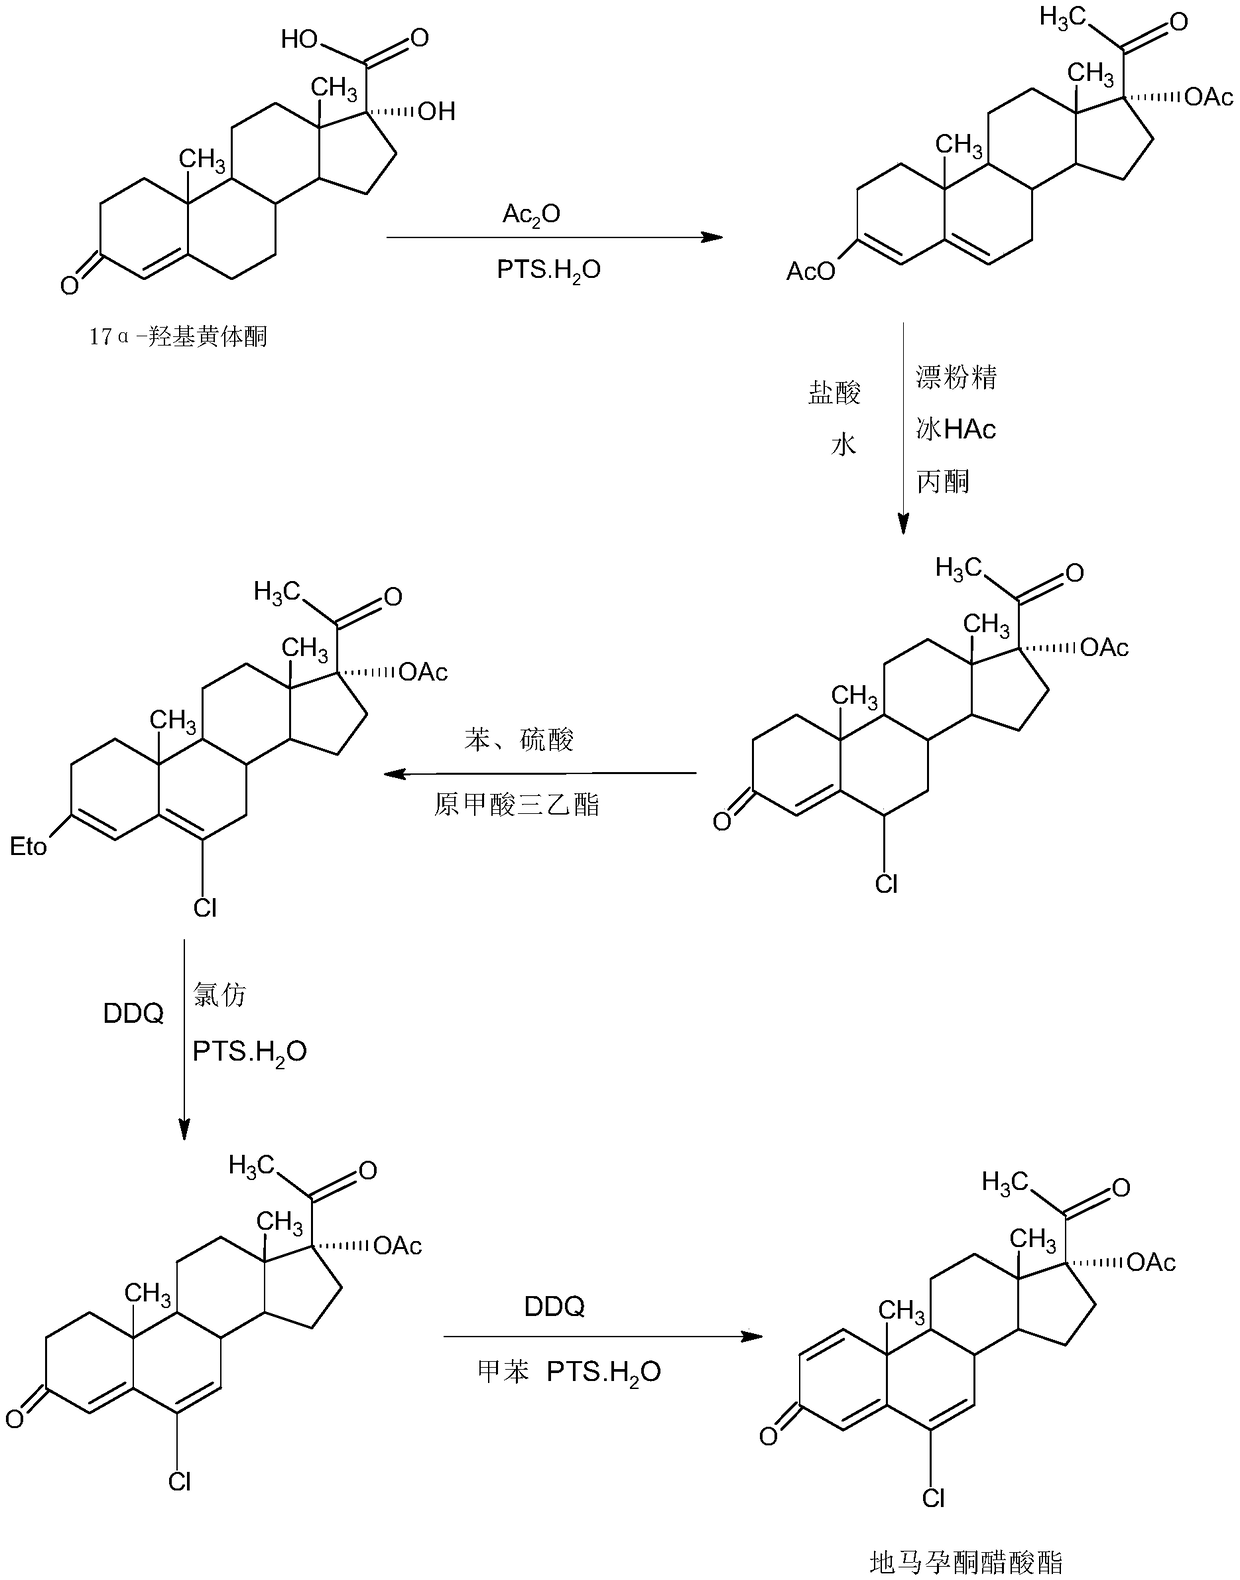 Delmadinone acetate preparation method